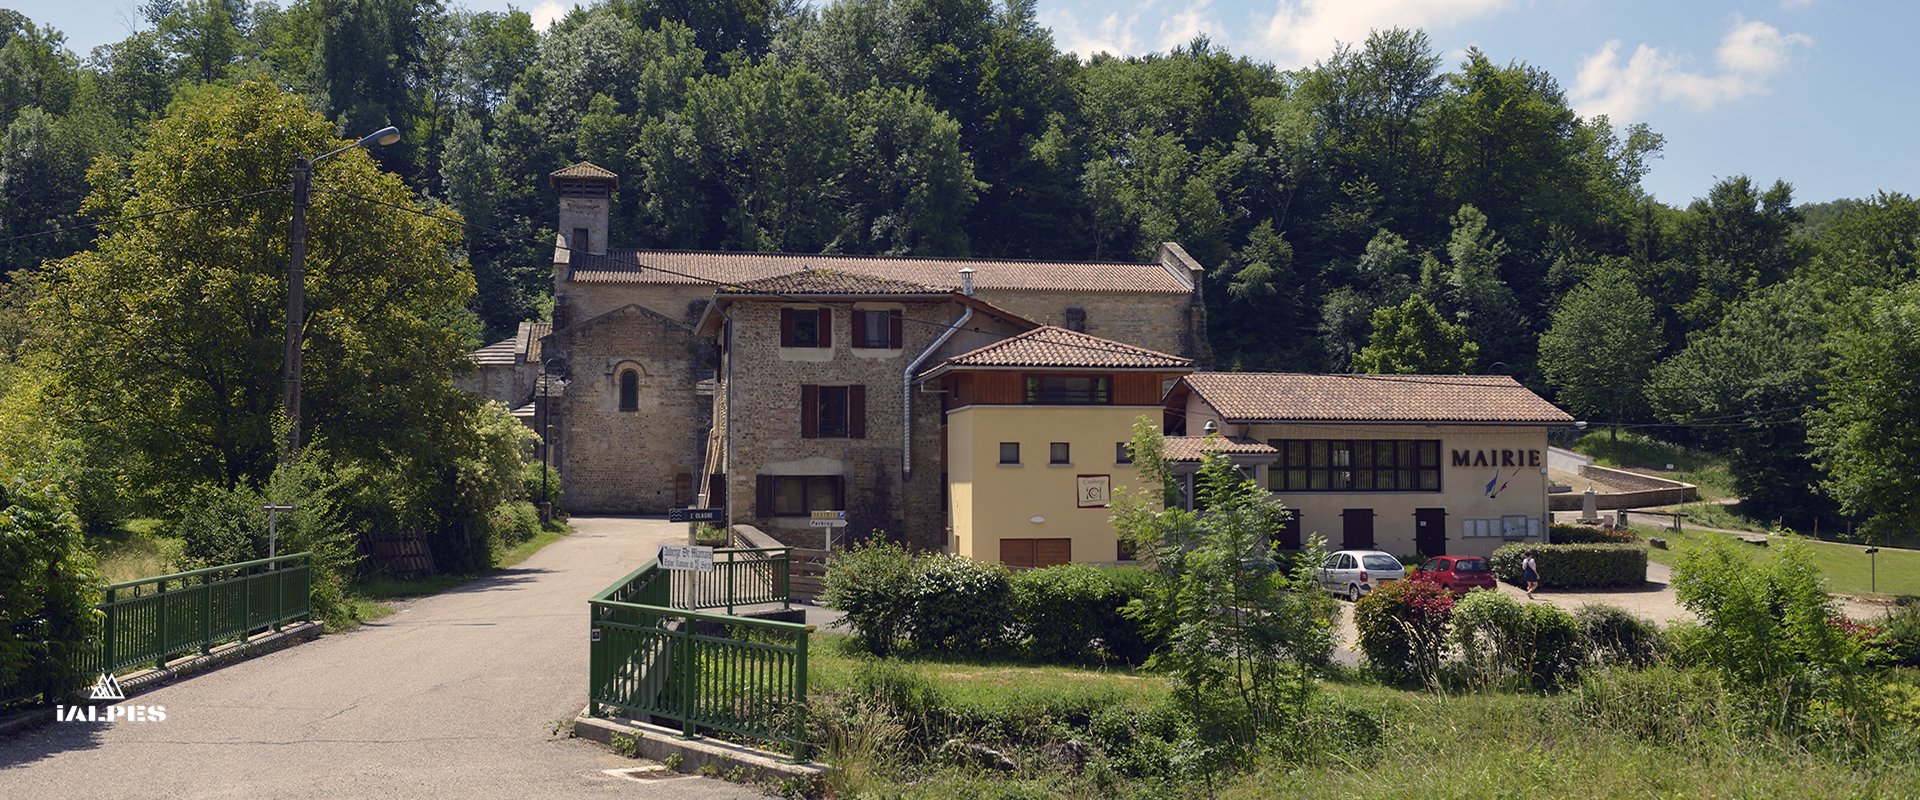 Village de Marnans en Isère